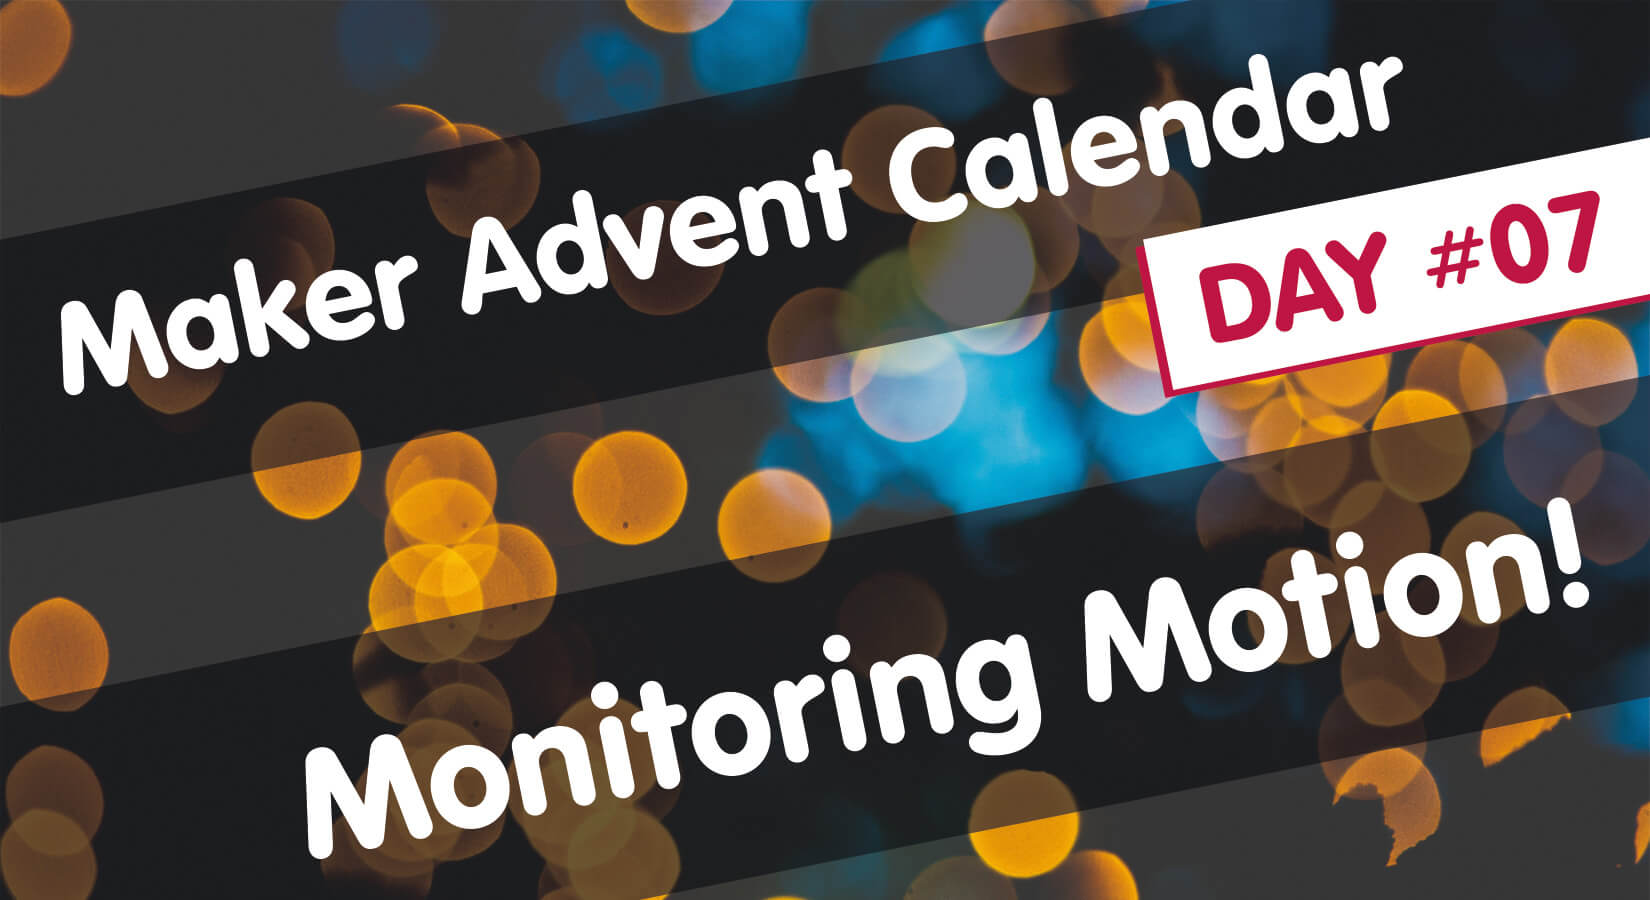 Maker Advent Calendar Day #7: Monitoring Motion!